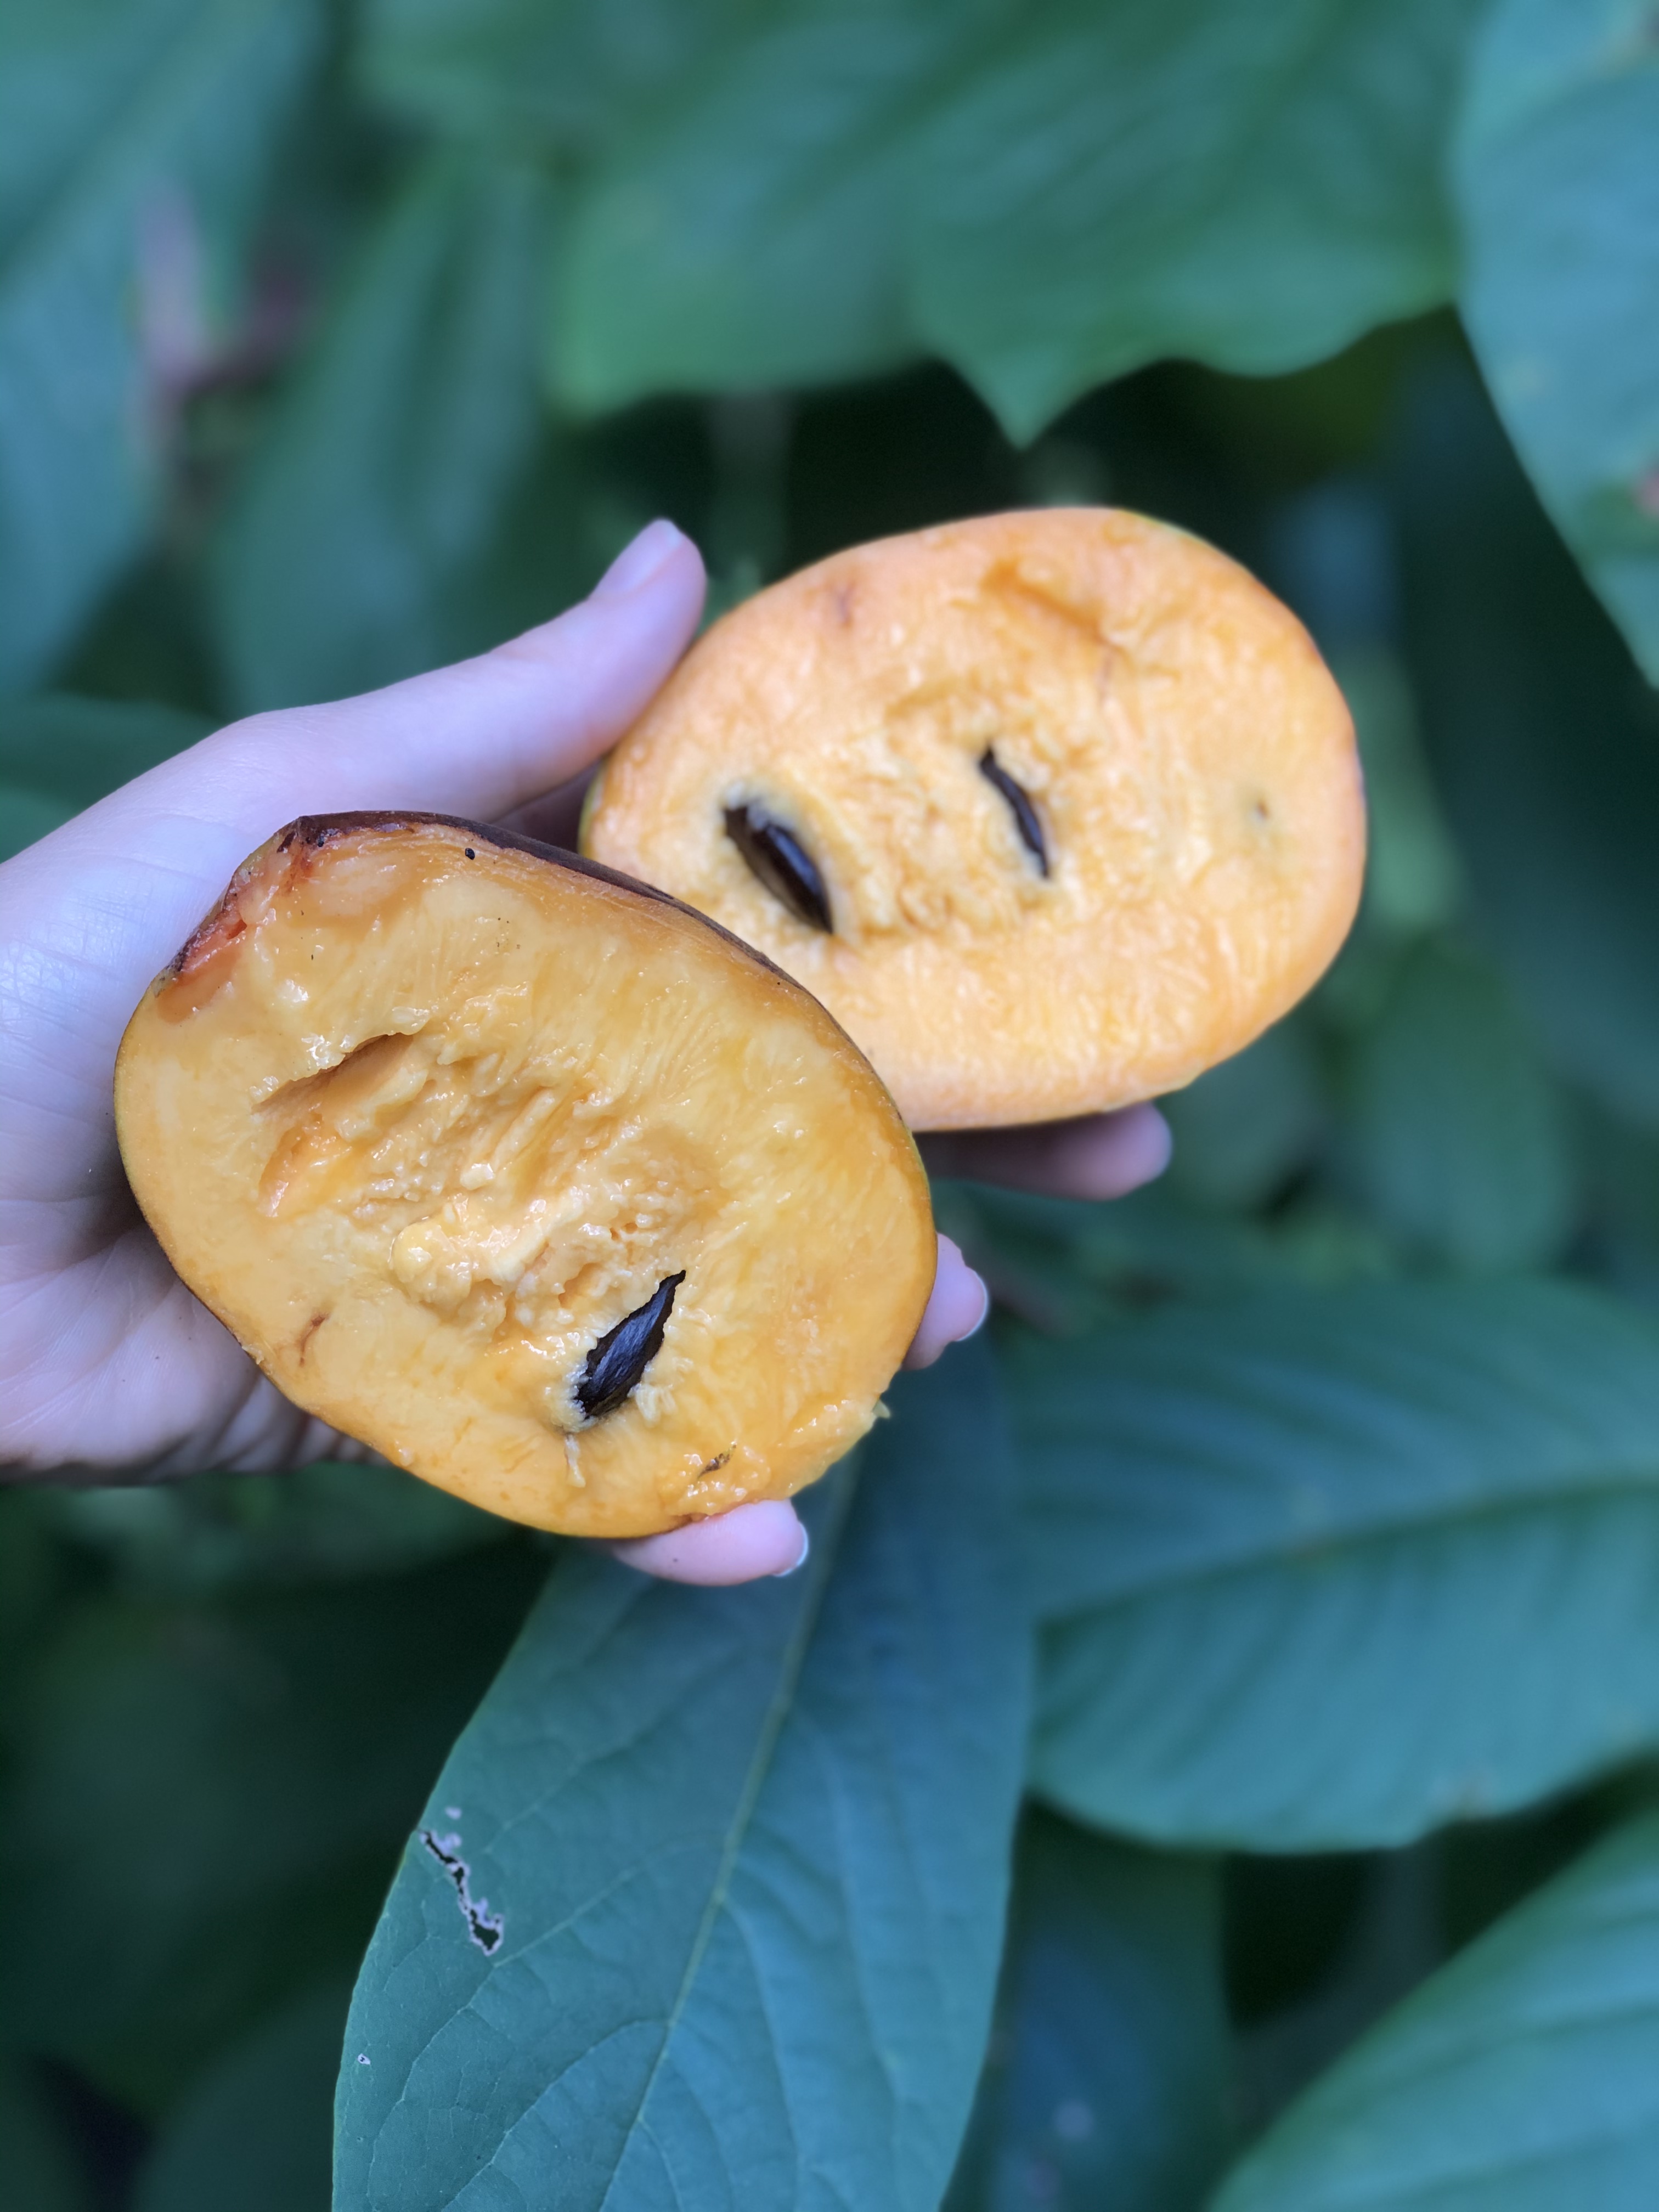 A ripe orange fruit with large black seeds.